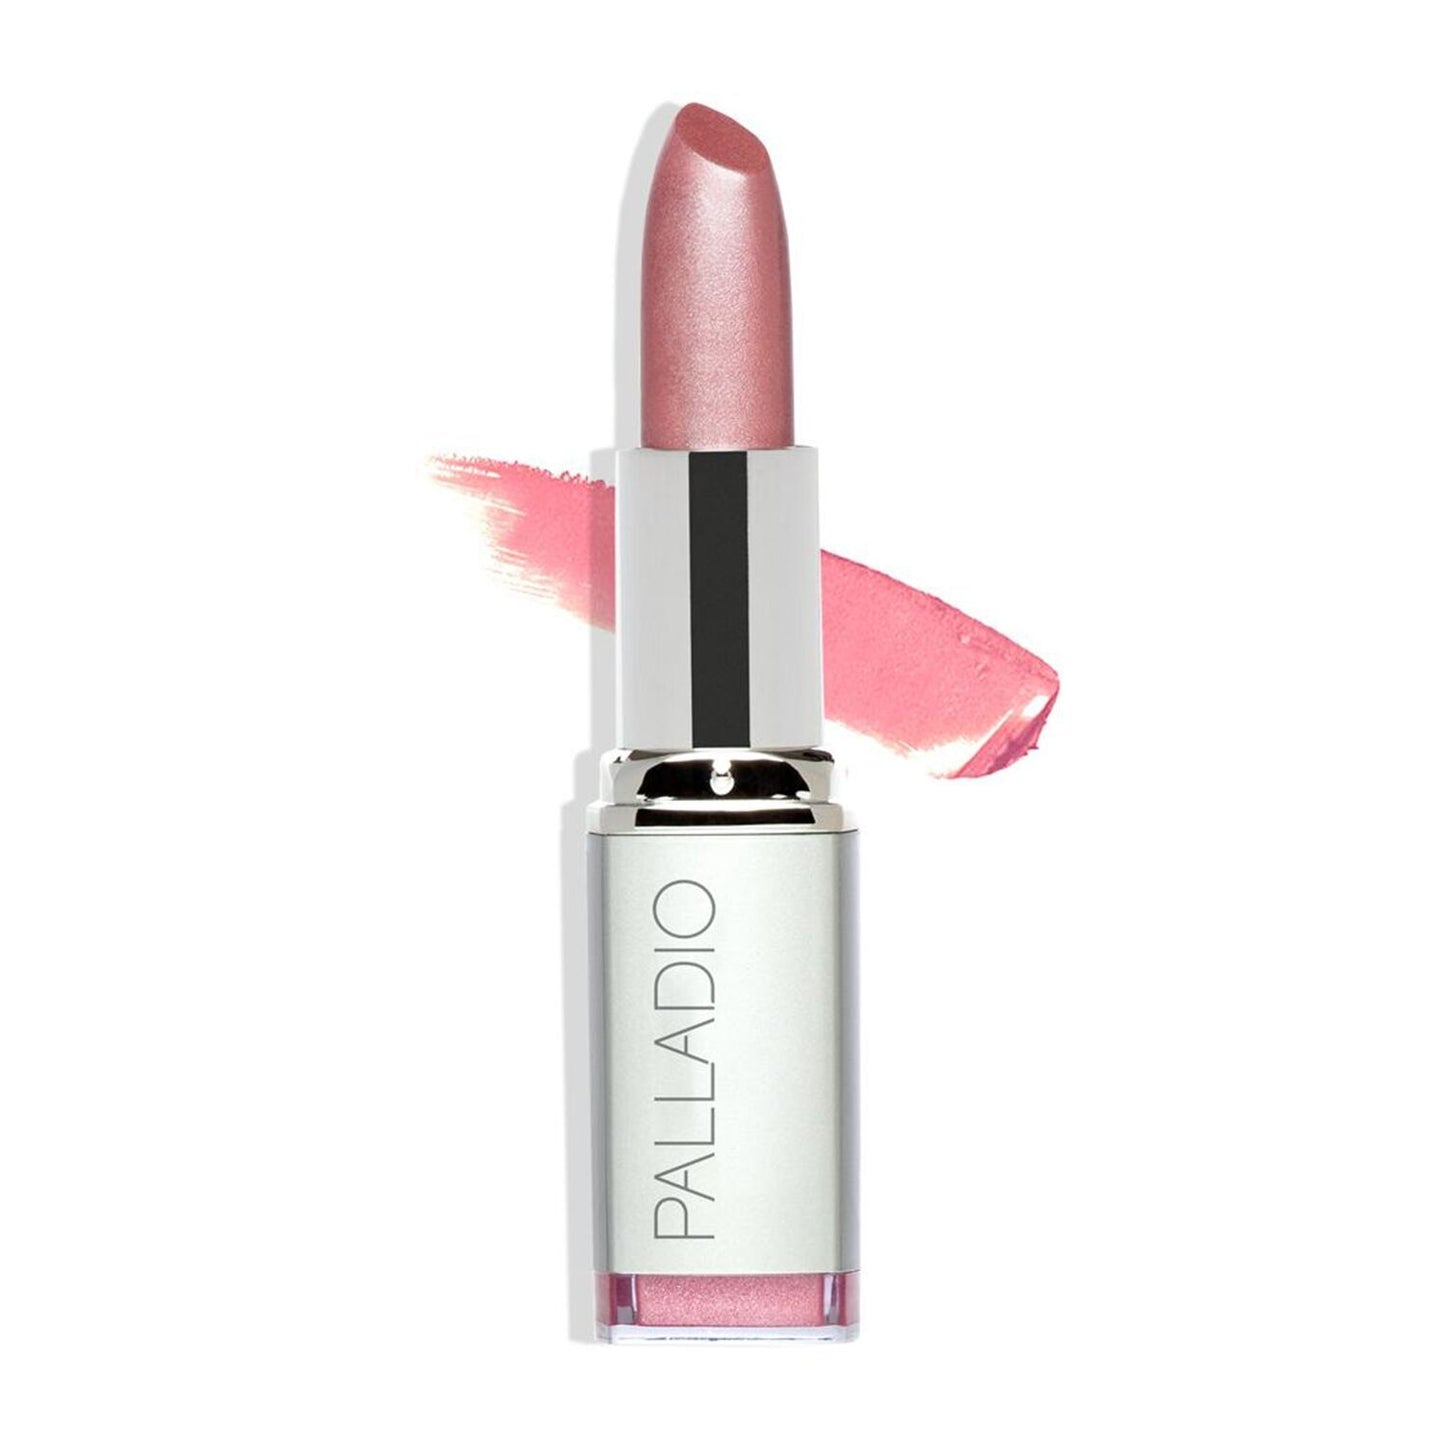 Palladio Herbal Lipstick Pinky